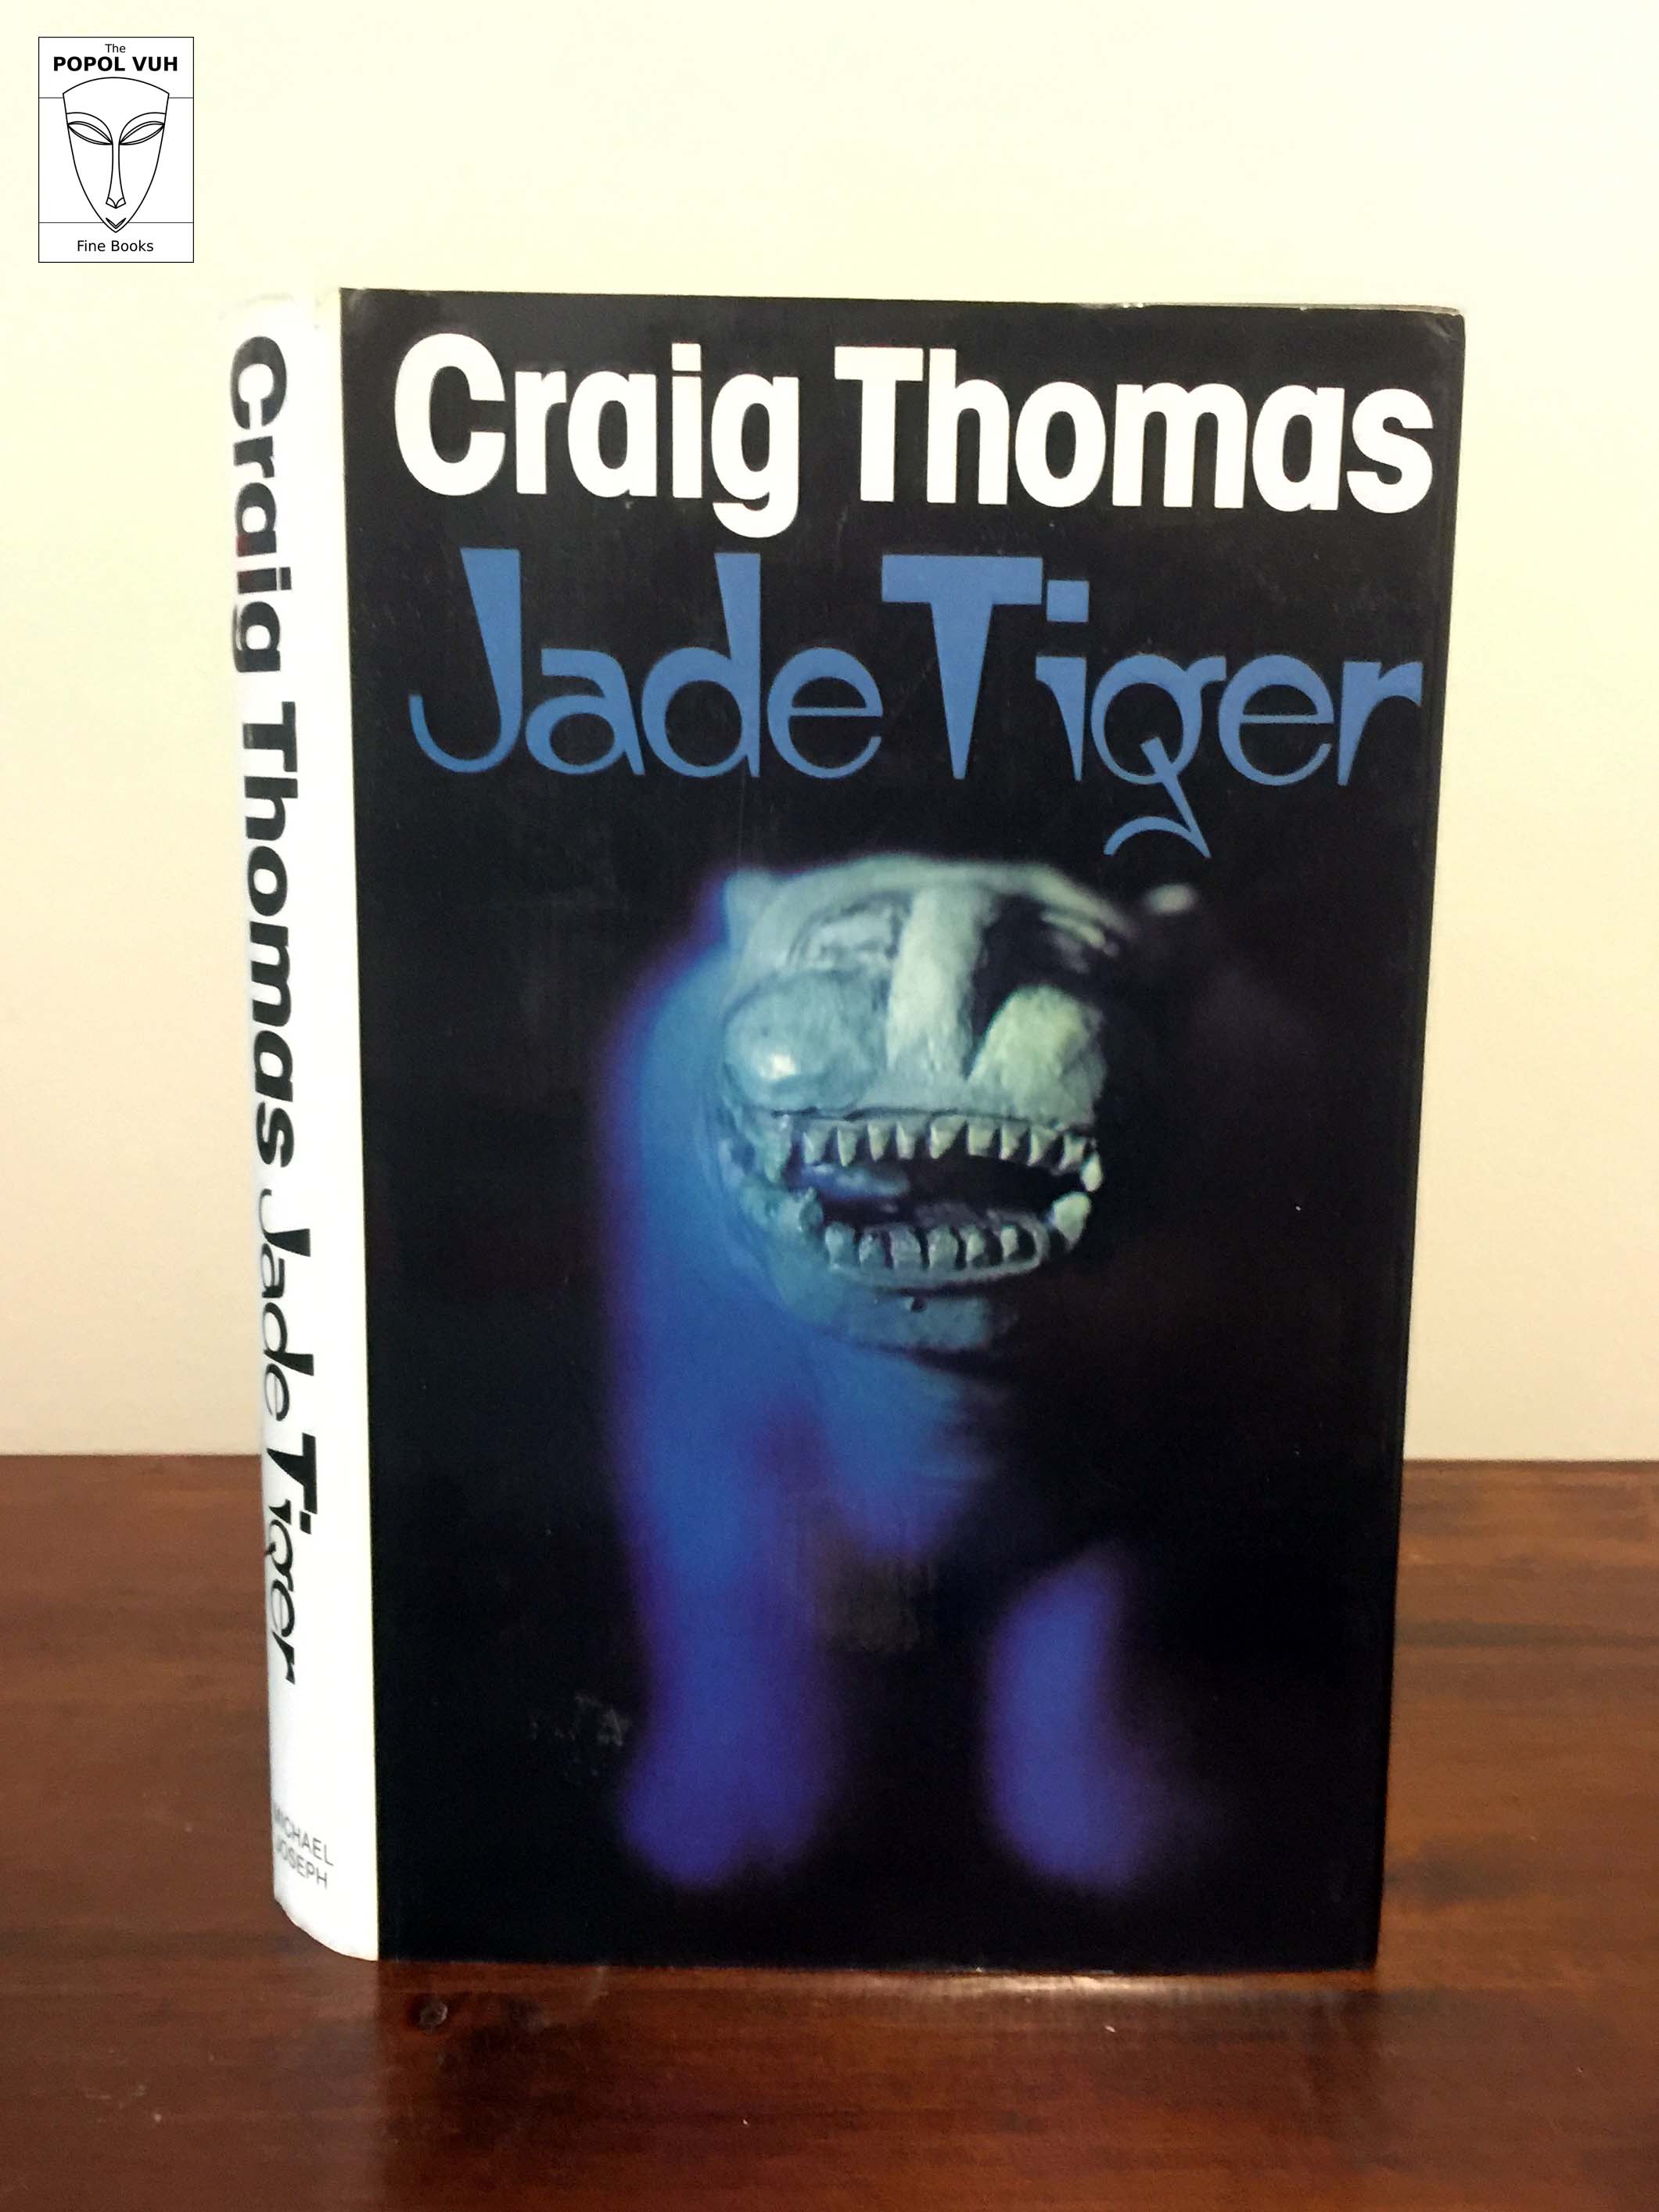 Craig Thomas - Jade Tiger